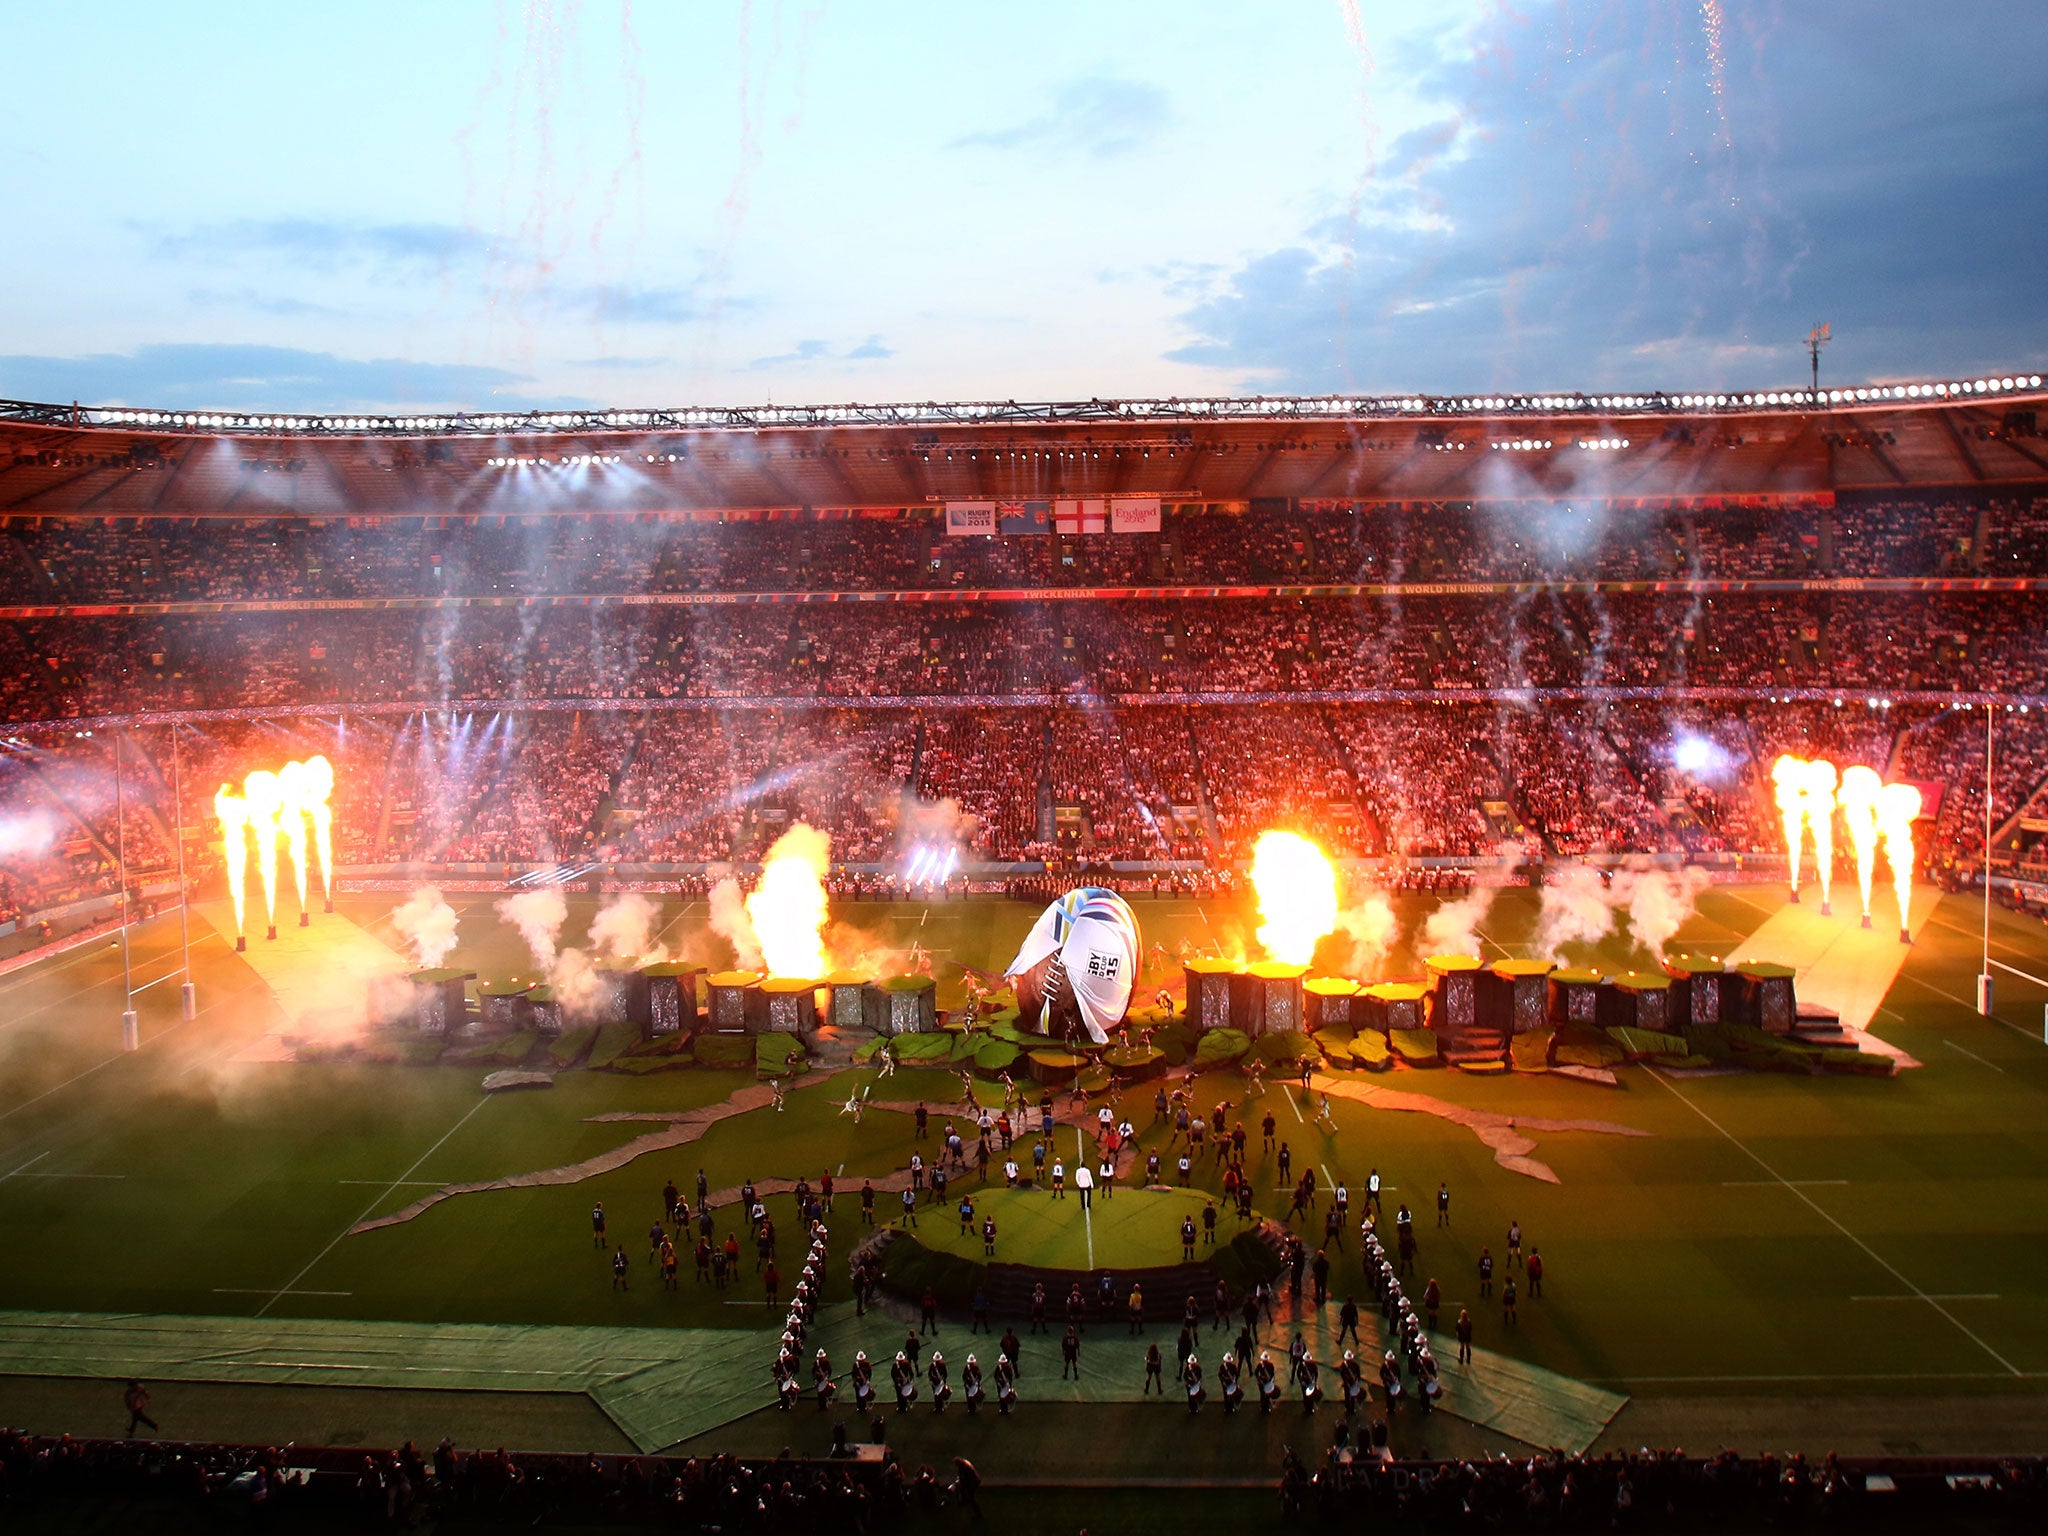 Twickenham Stadium will host the Rugby World Cup final